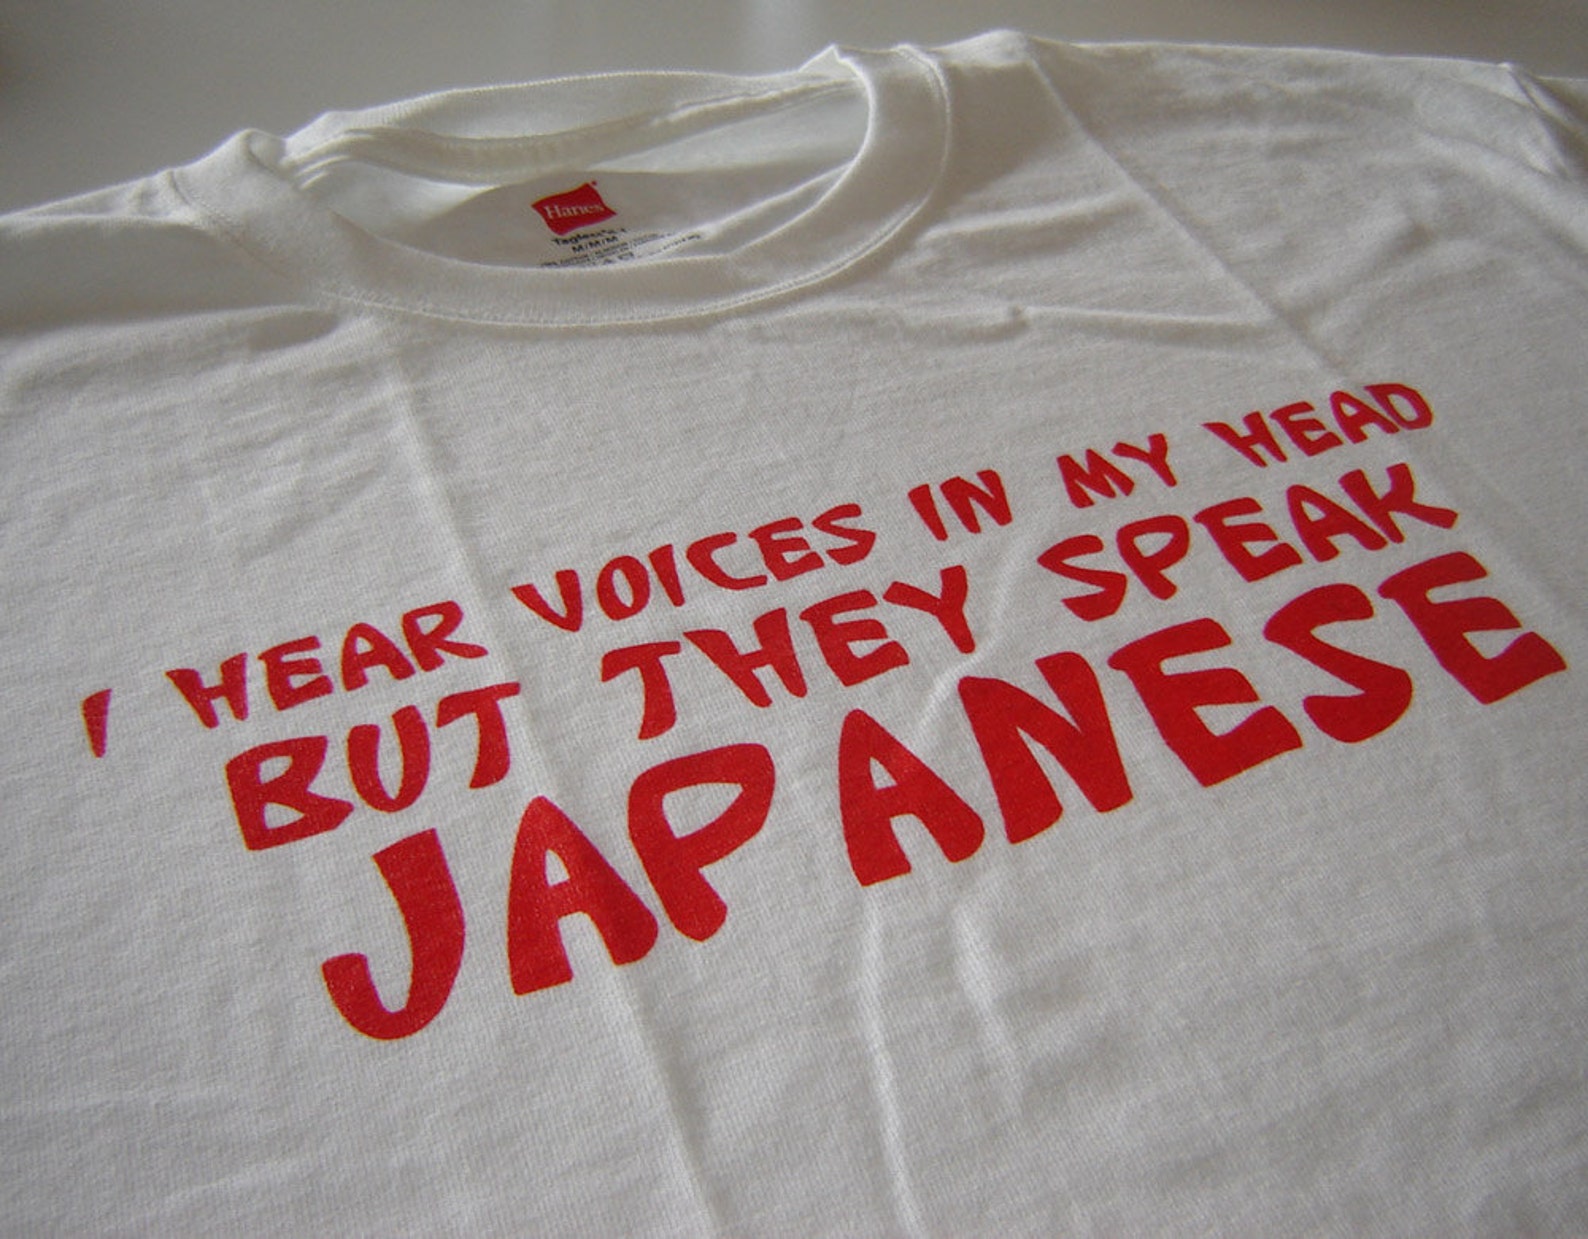 They speak ow. Футболка народная. Футболки для Гиков. Positive message футболка. Funny Japanese Shirts.